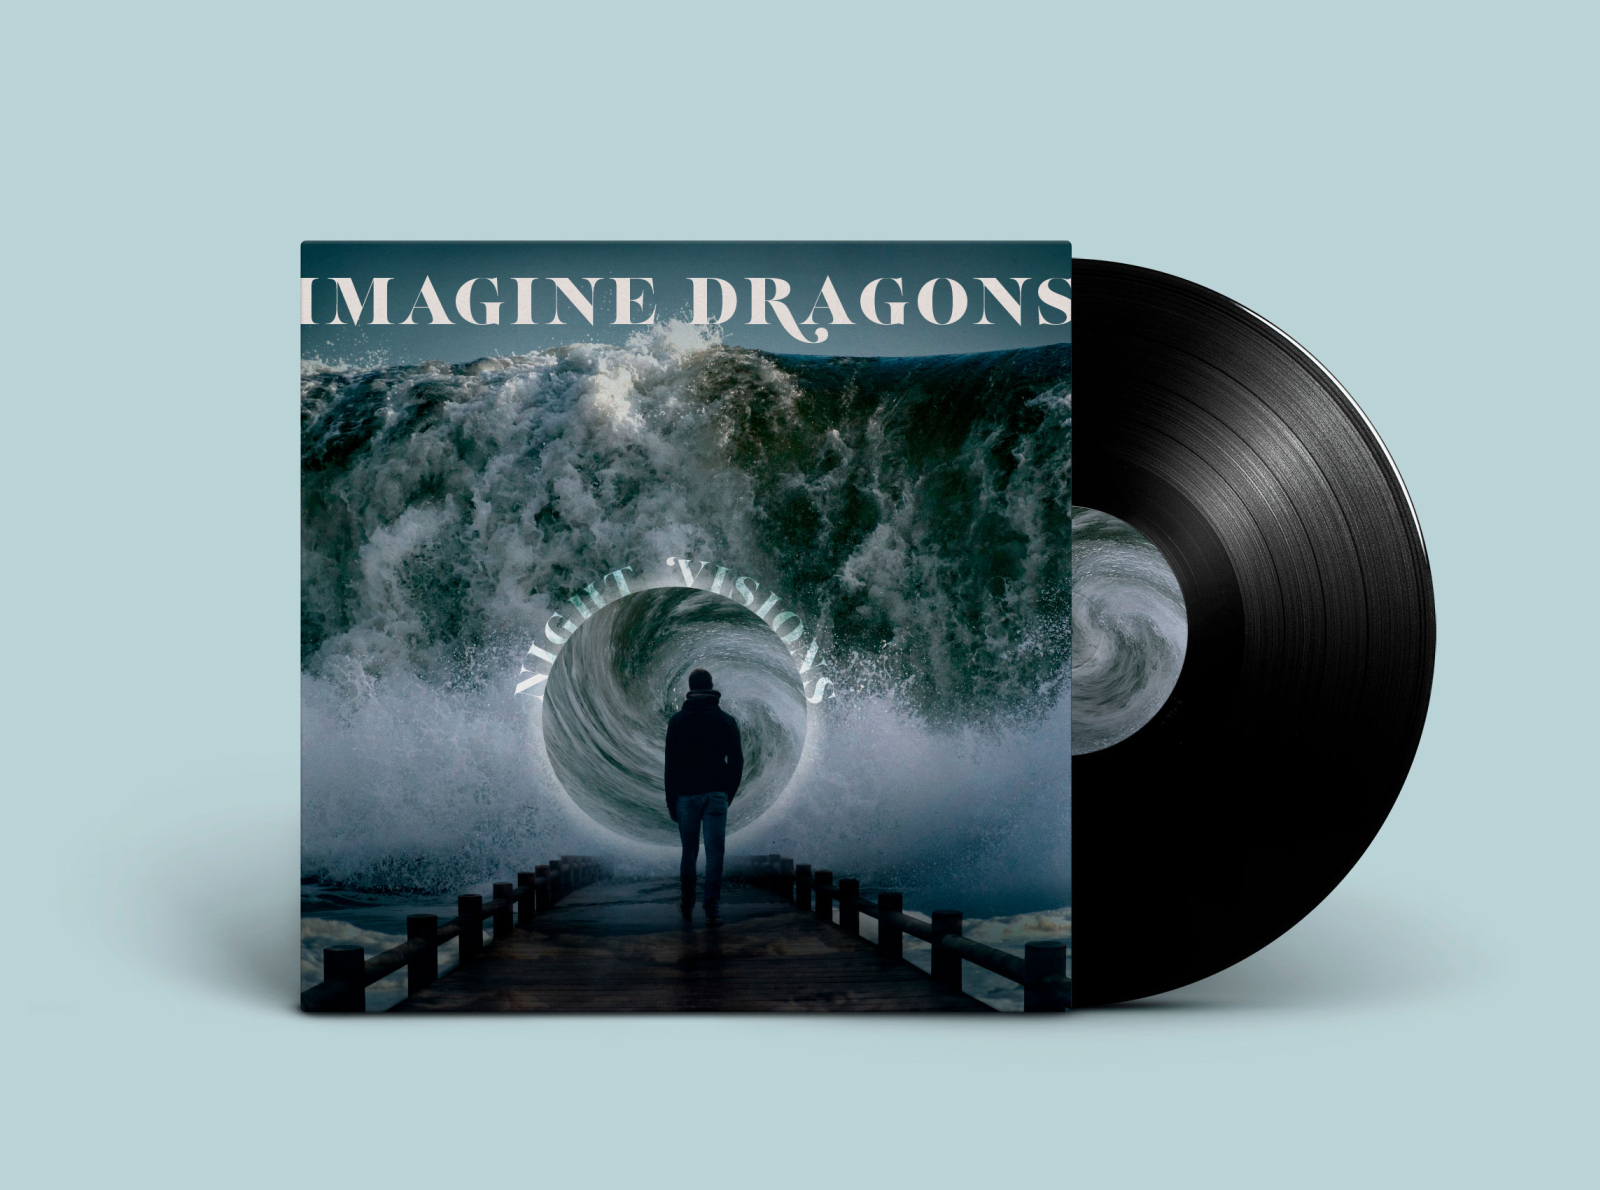 imagine dragons album free download